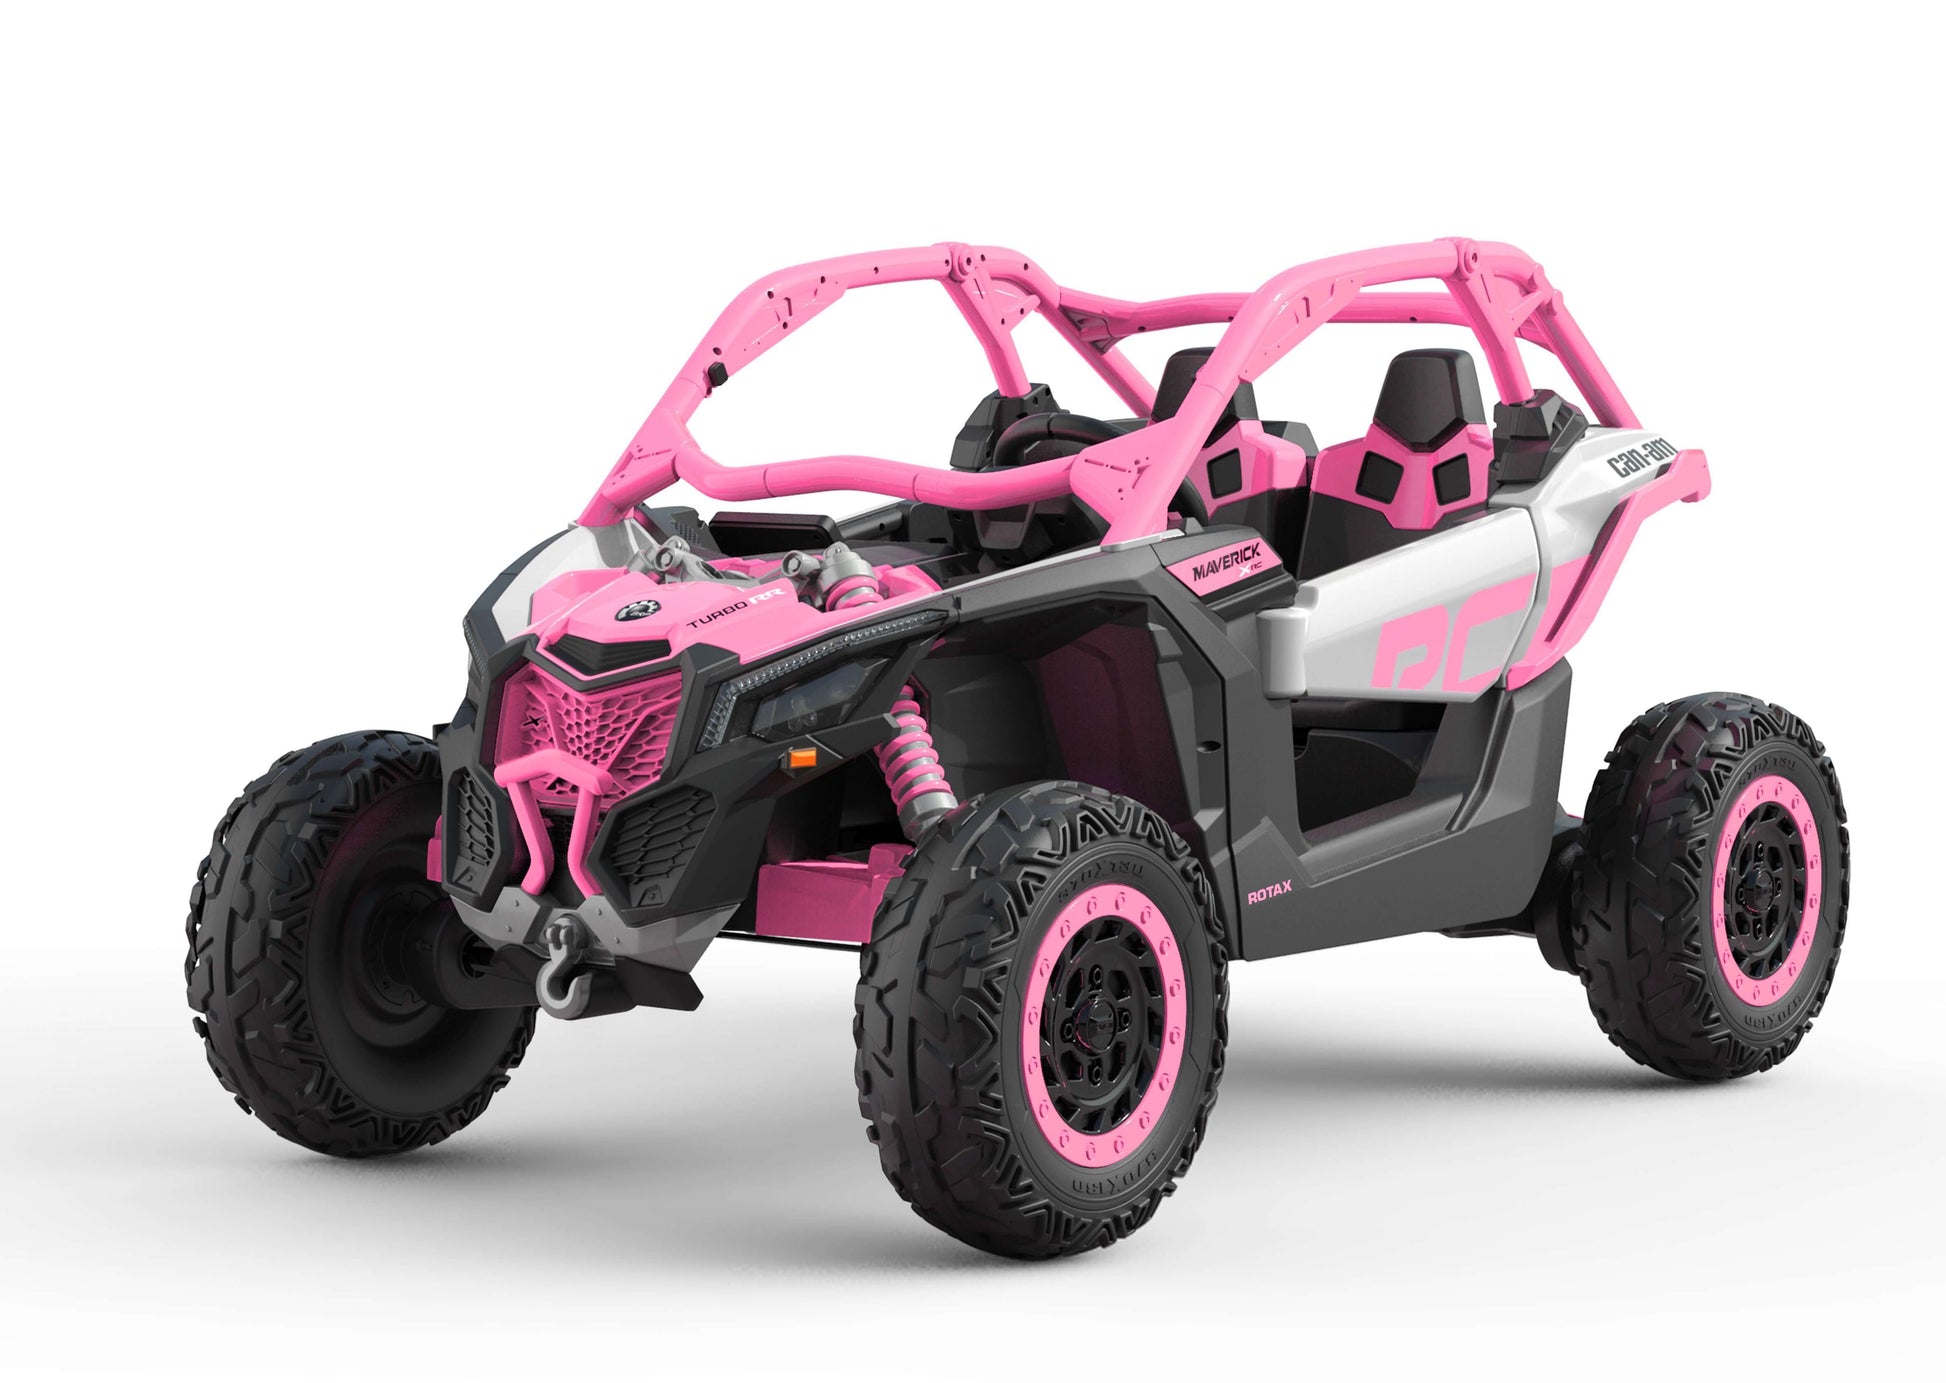 24V Can-Am Maverick X3 Kids Ride-On Buggy - Rose – Big Toys Direct